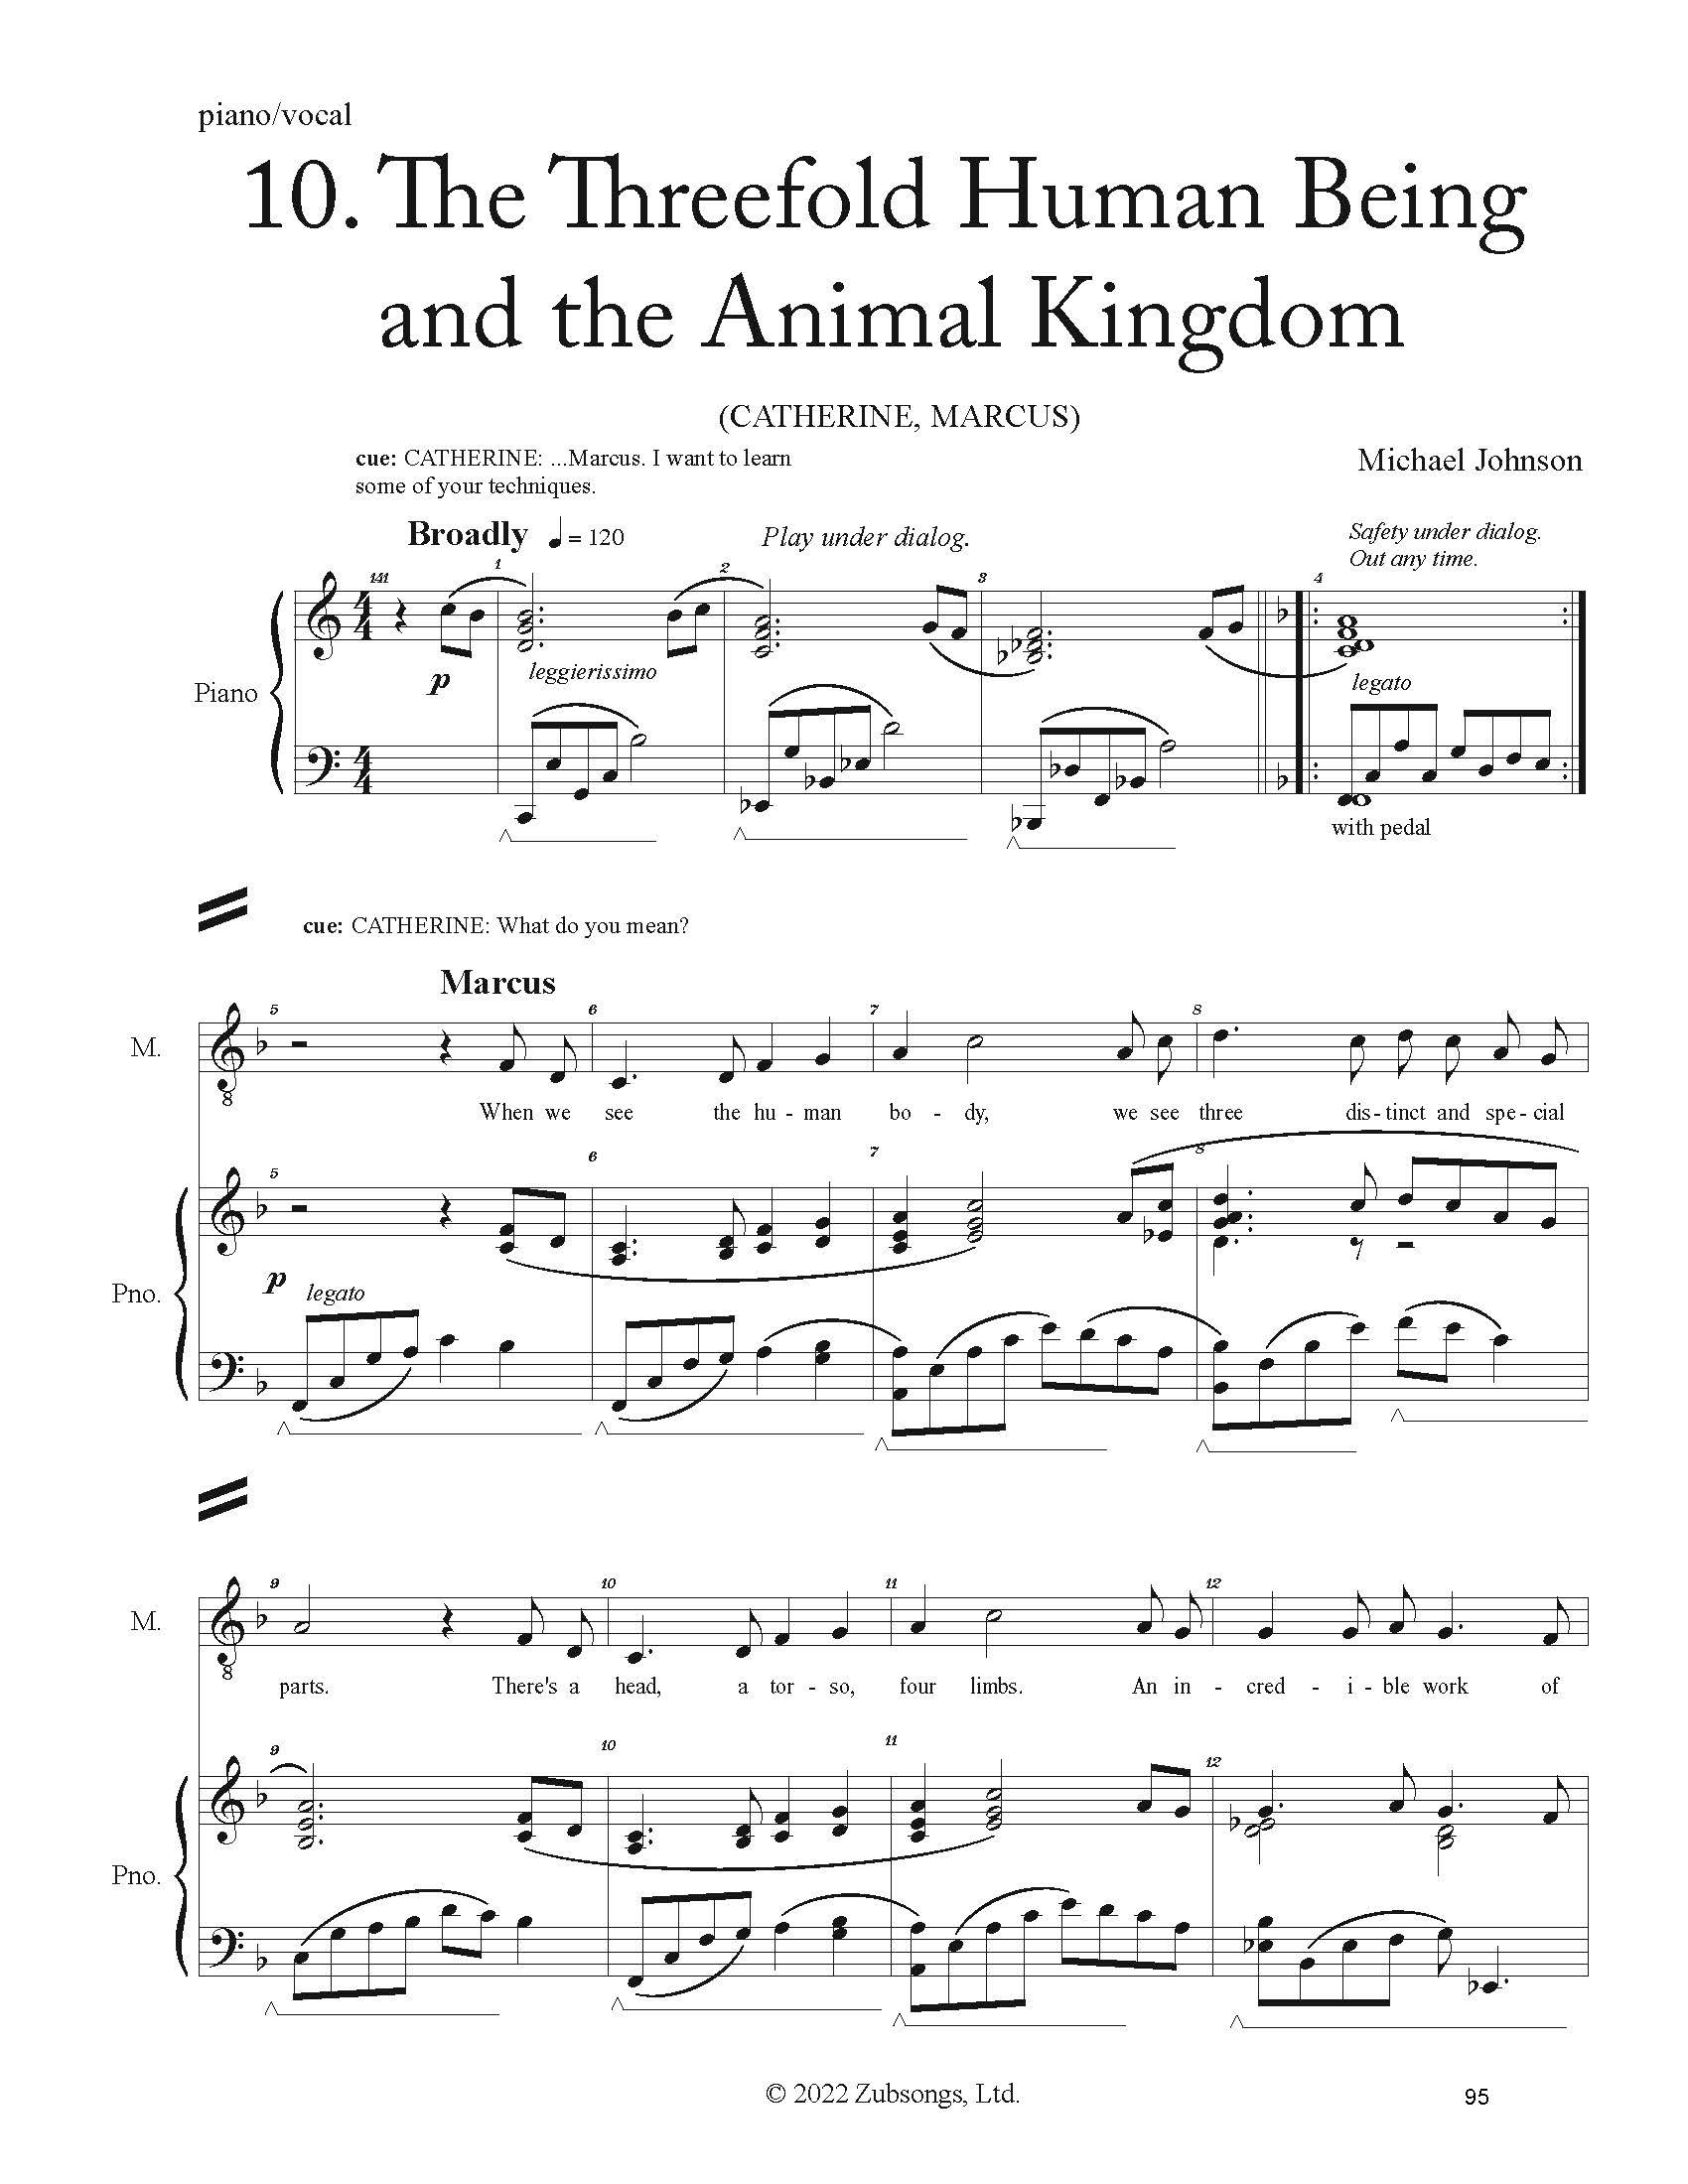 FULL PIANO VOCAL SCORE DRAFT 1 - Score_Page_095.jpg